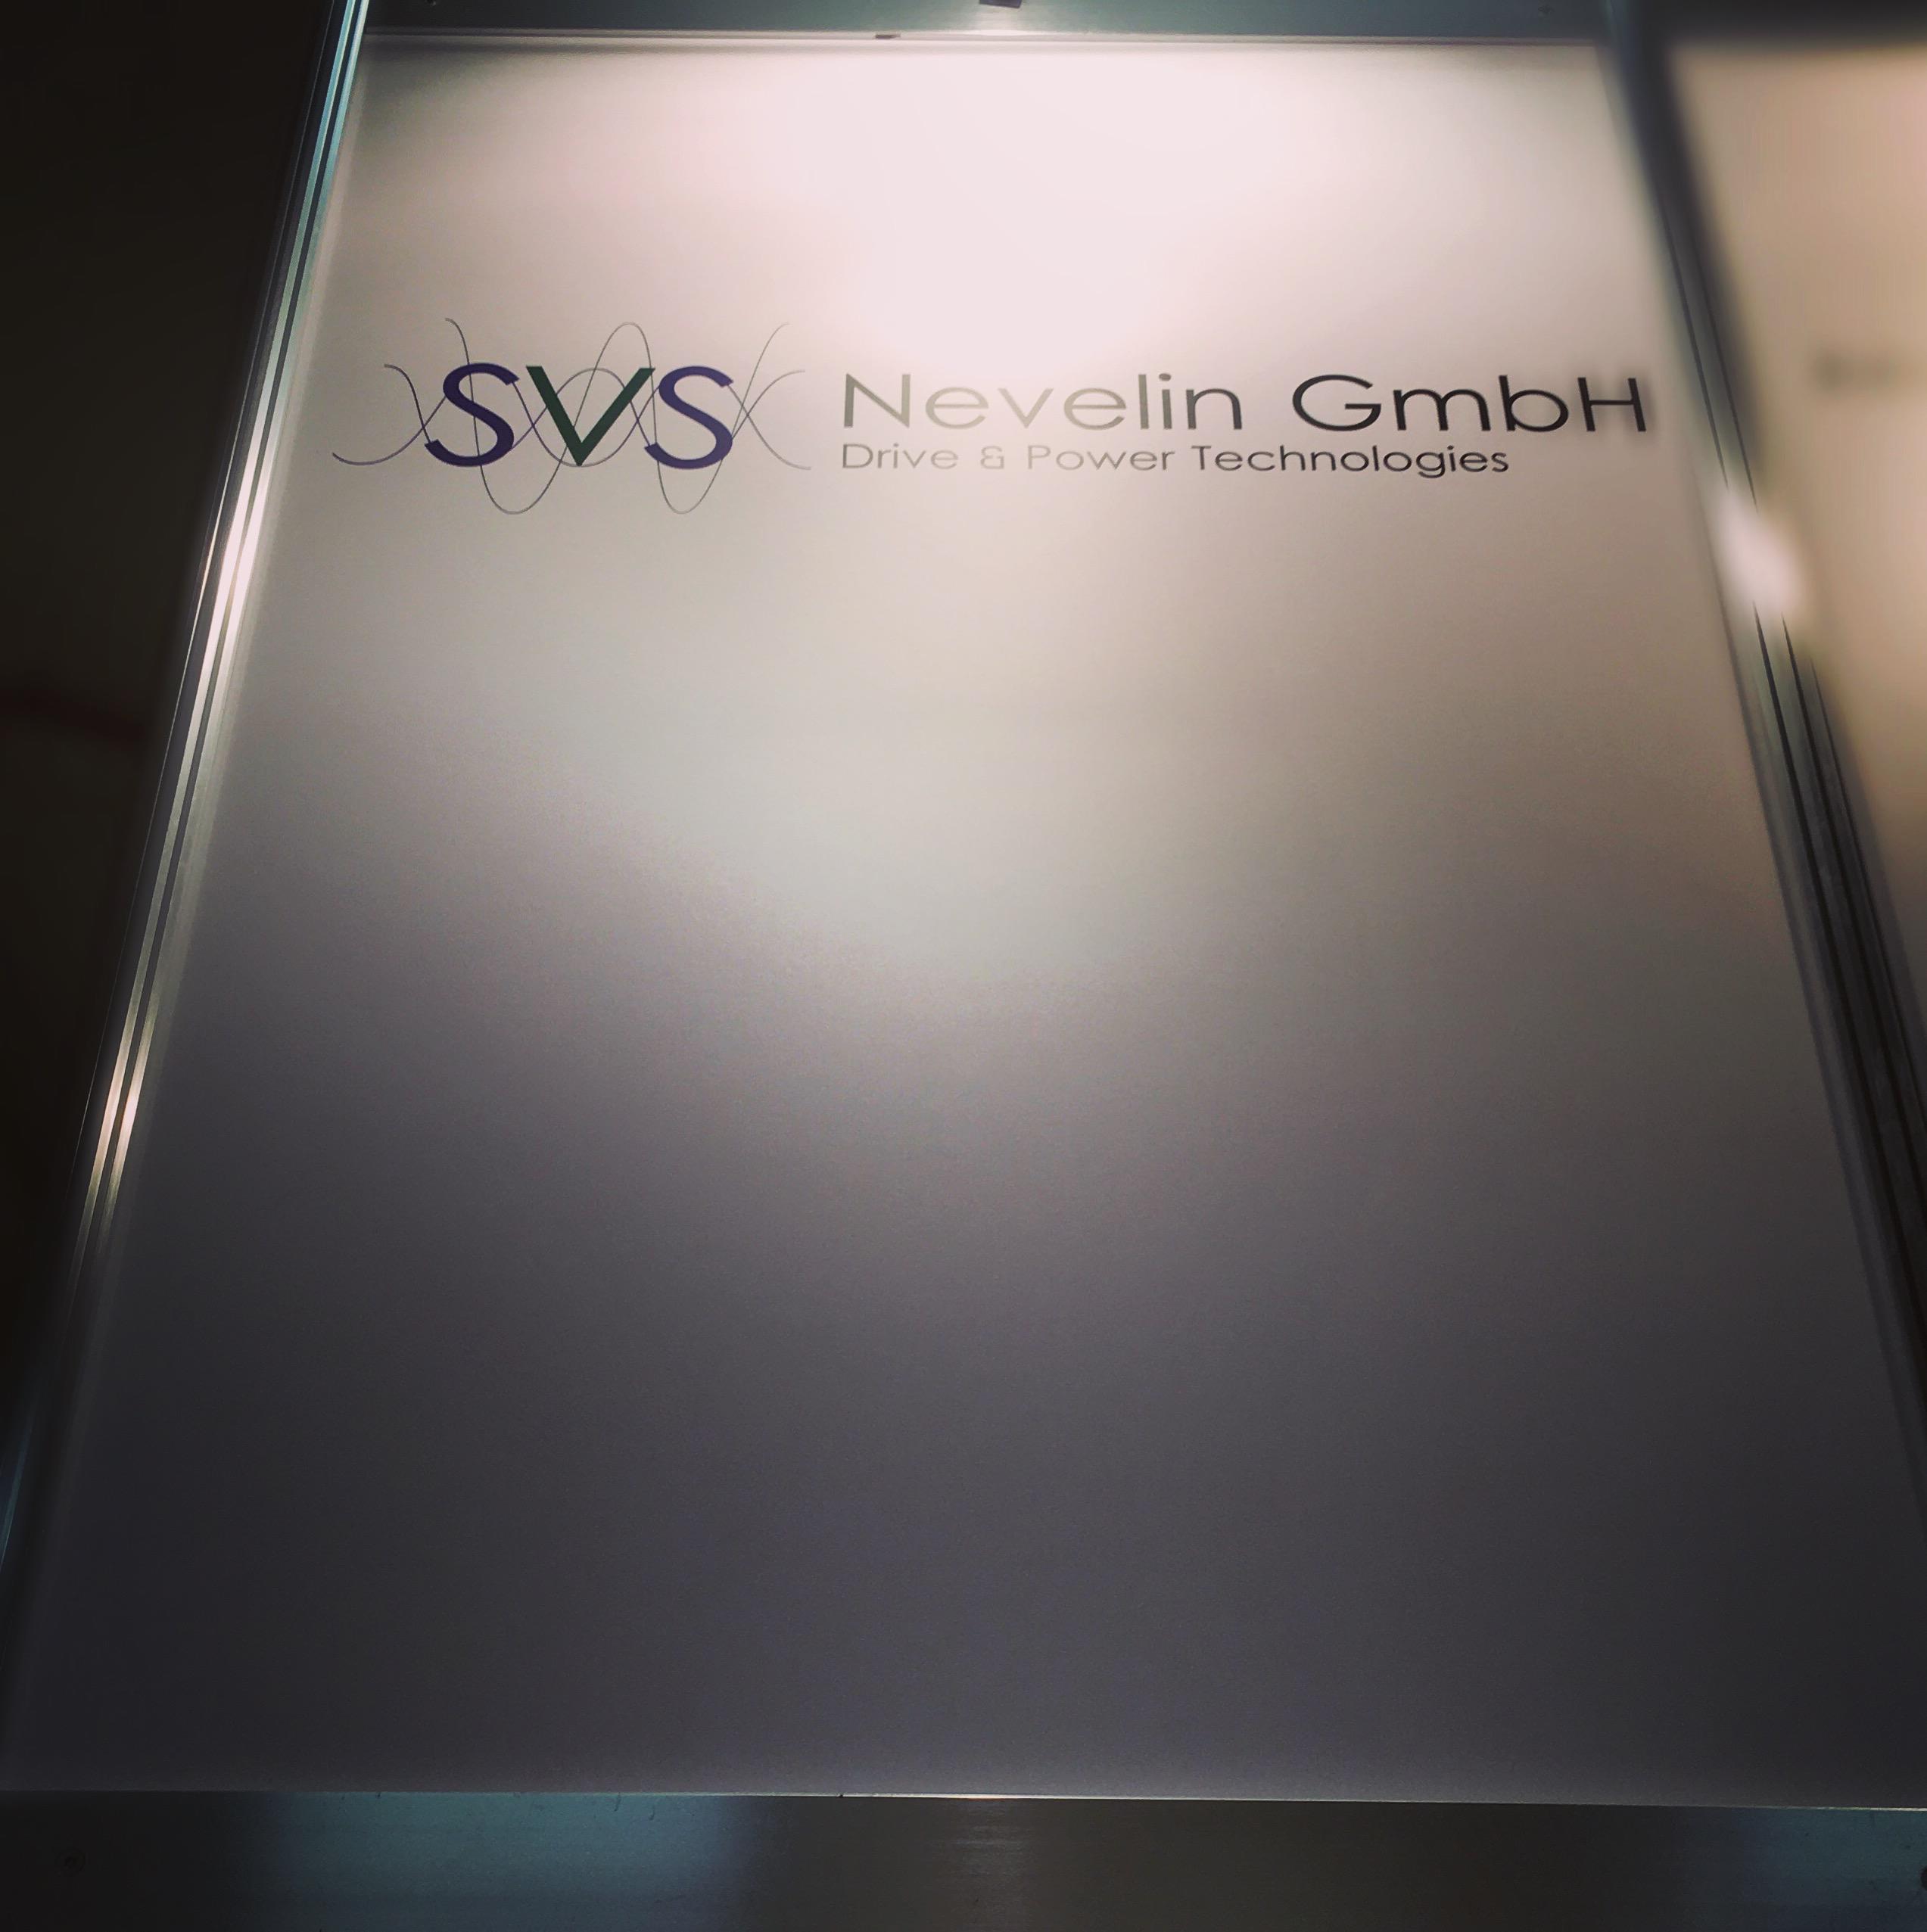 SVS Nevelin GmbH, Katernberger Strasse 107 in Essen